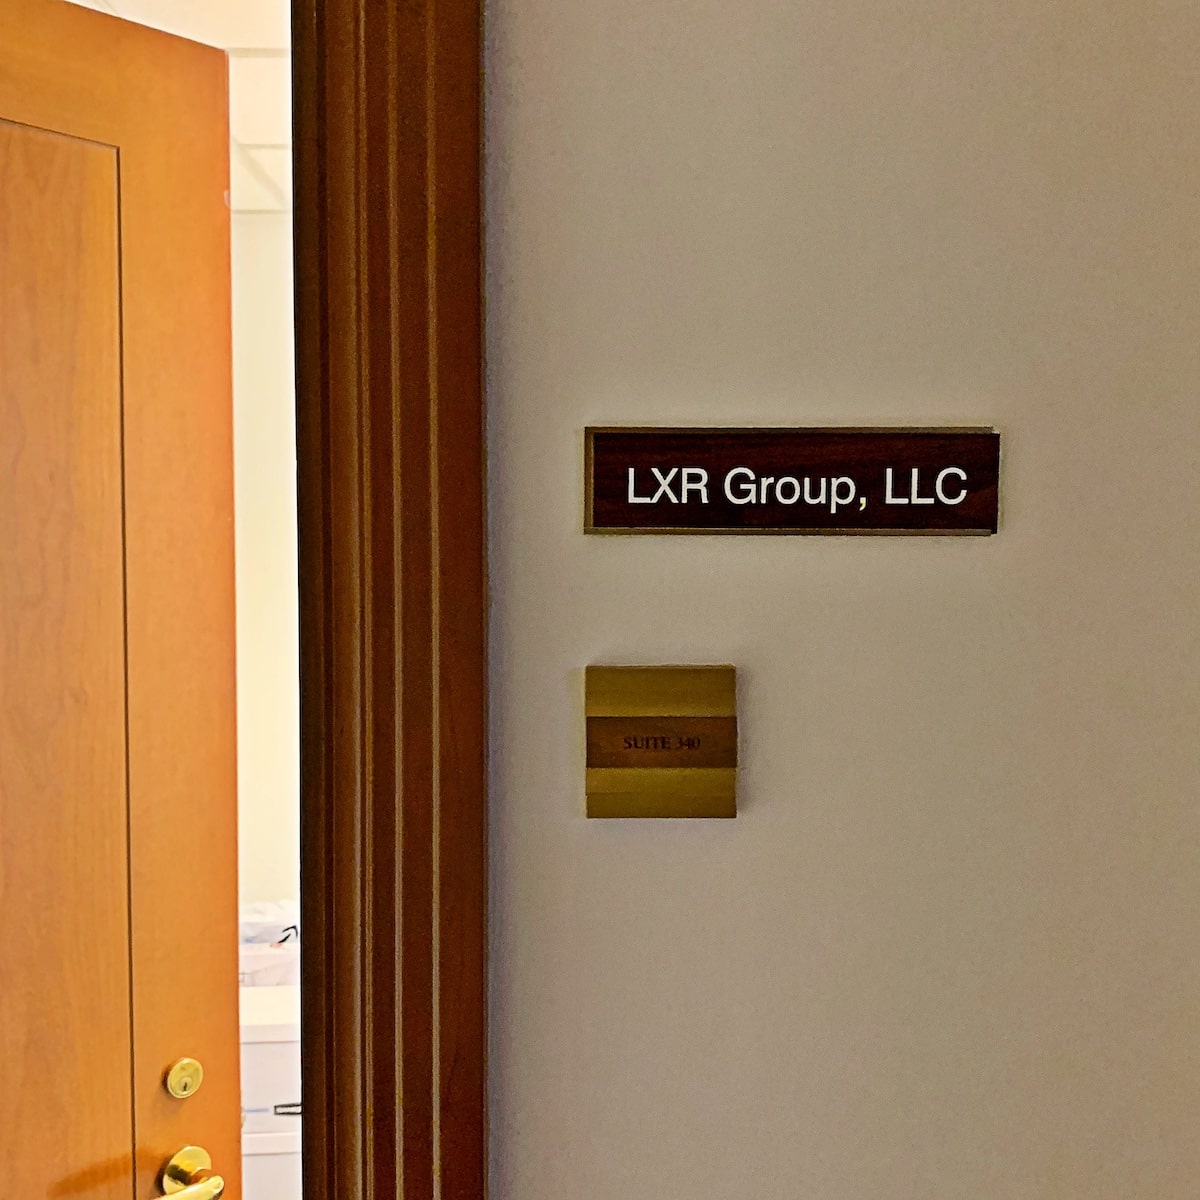 LXR Group, LLC